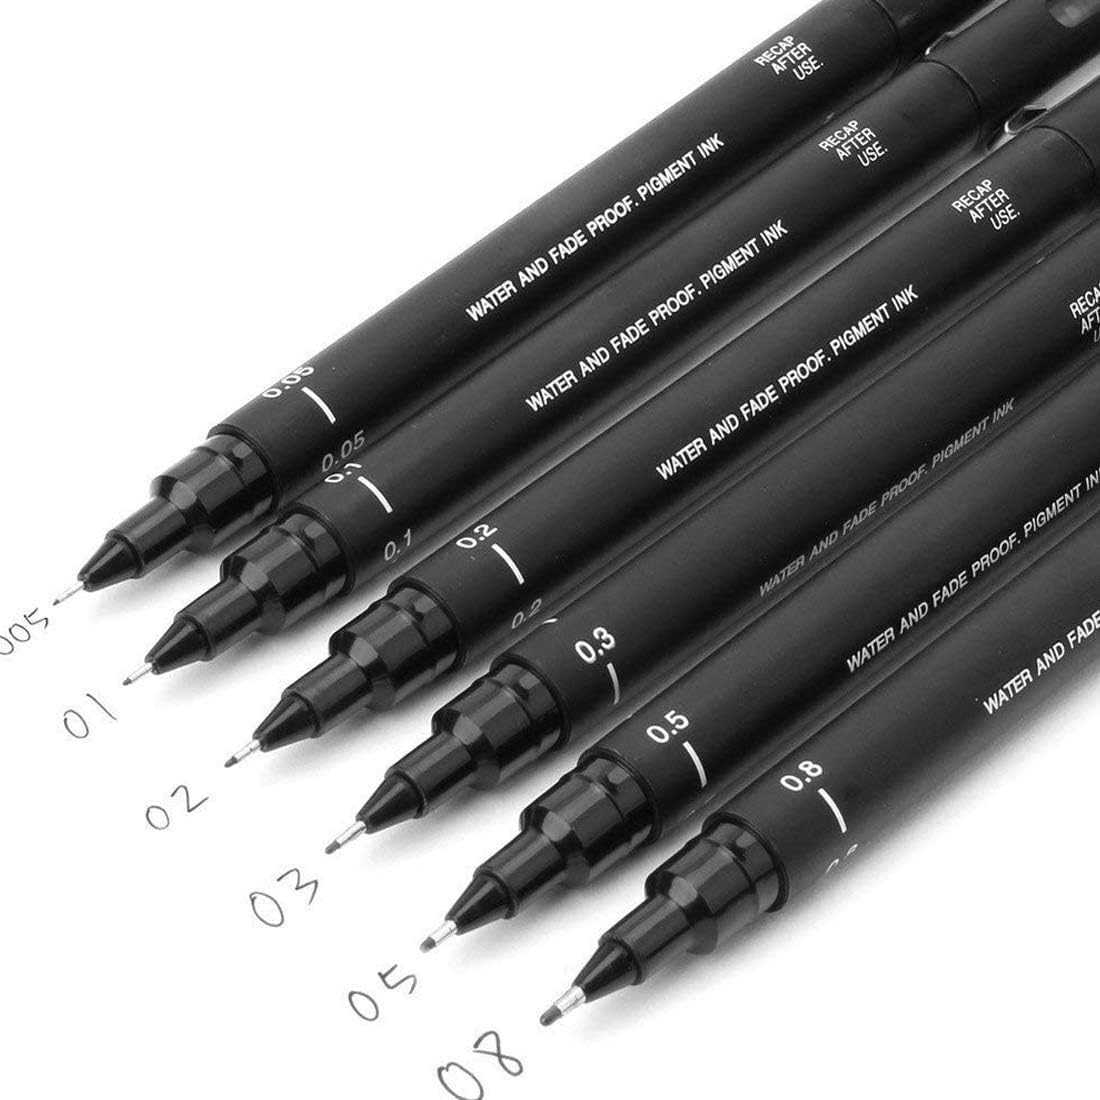 Uni Pin Fineliner Drawing Pen - 15 Grades - Black Ink